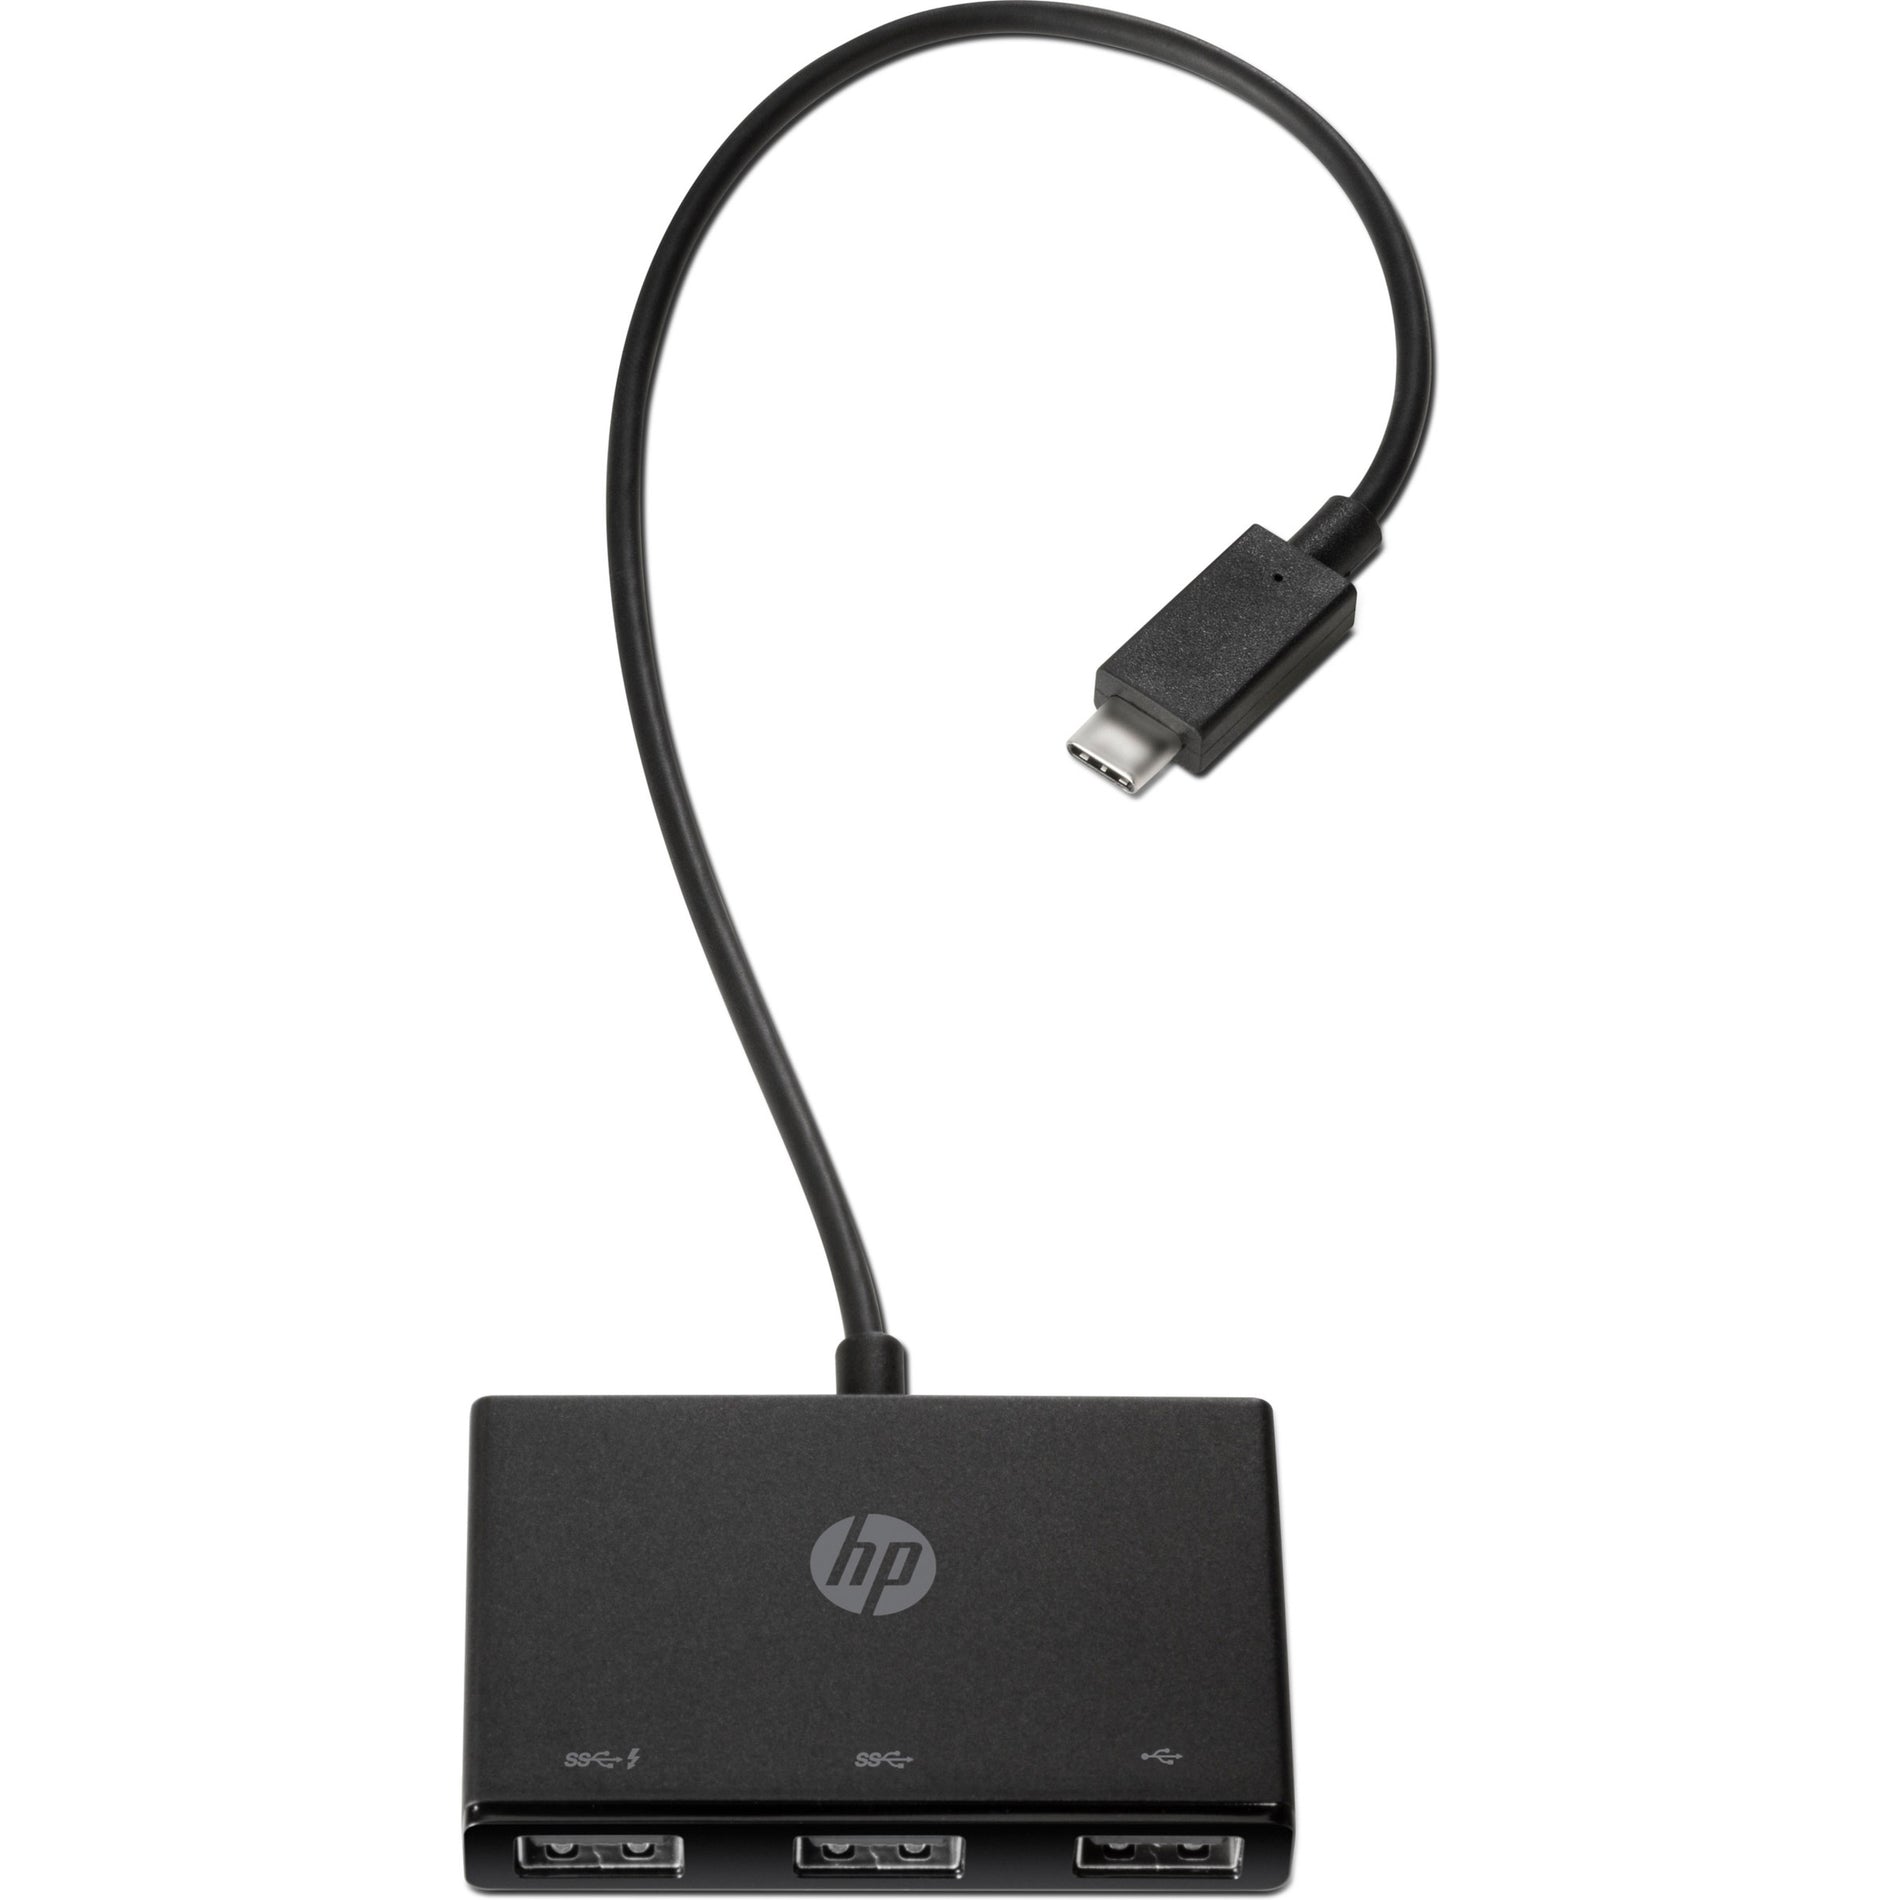 HP Z6A00UT USB Hub - USB Type C, 1 Year Limited Warranty, China Origin